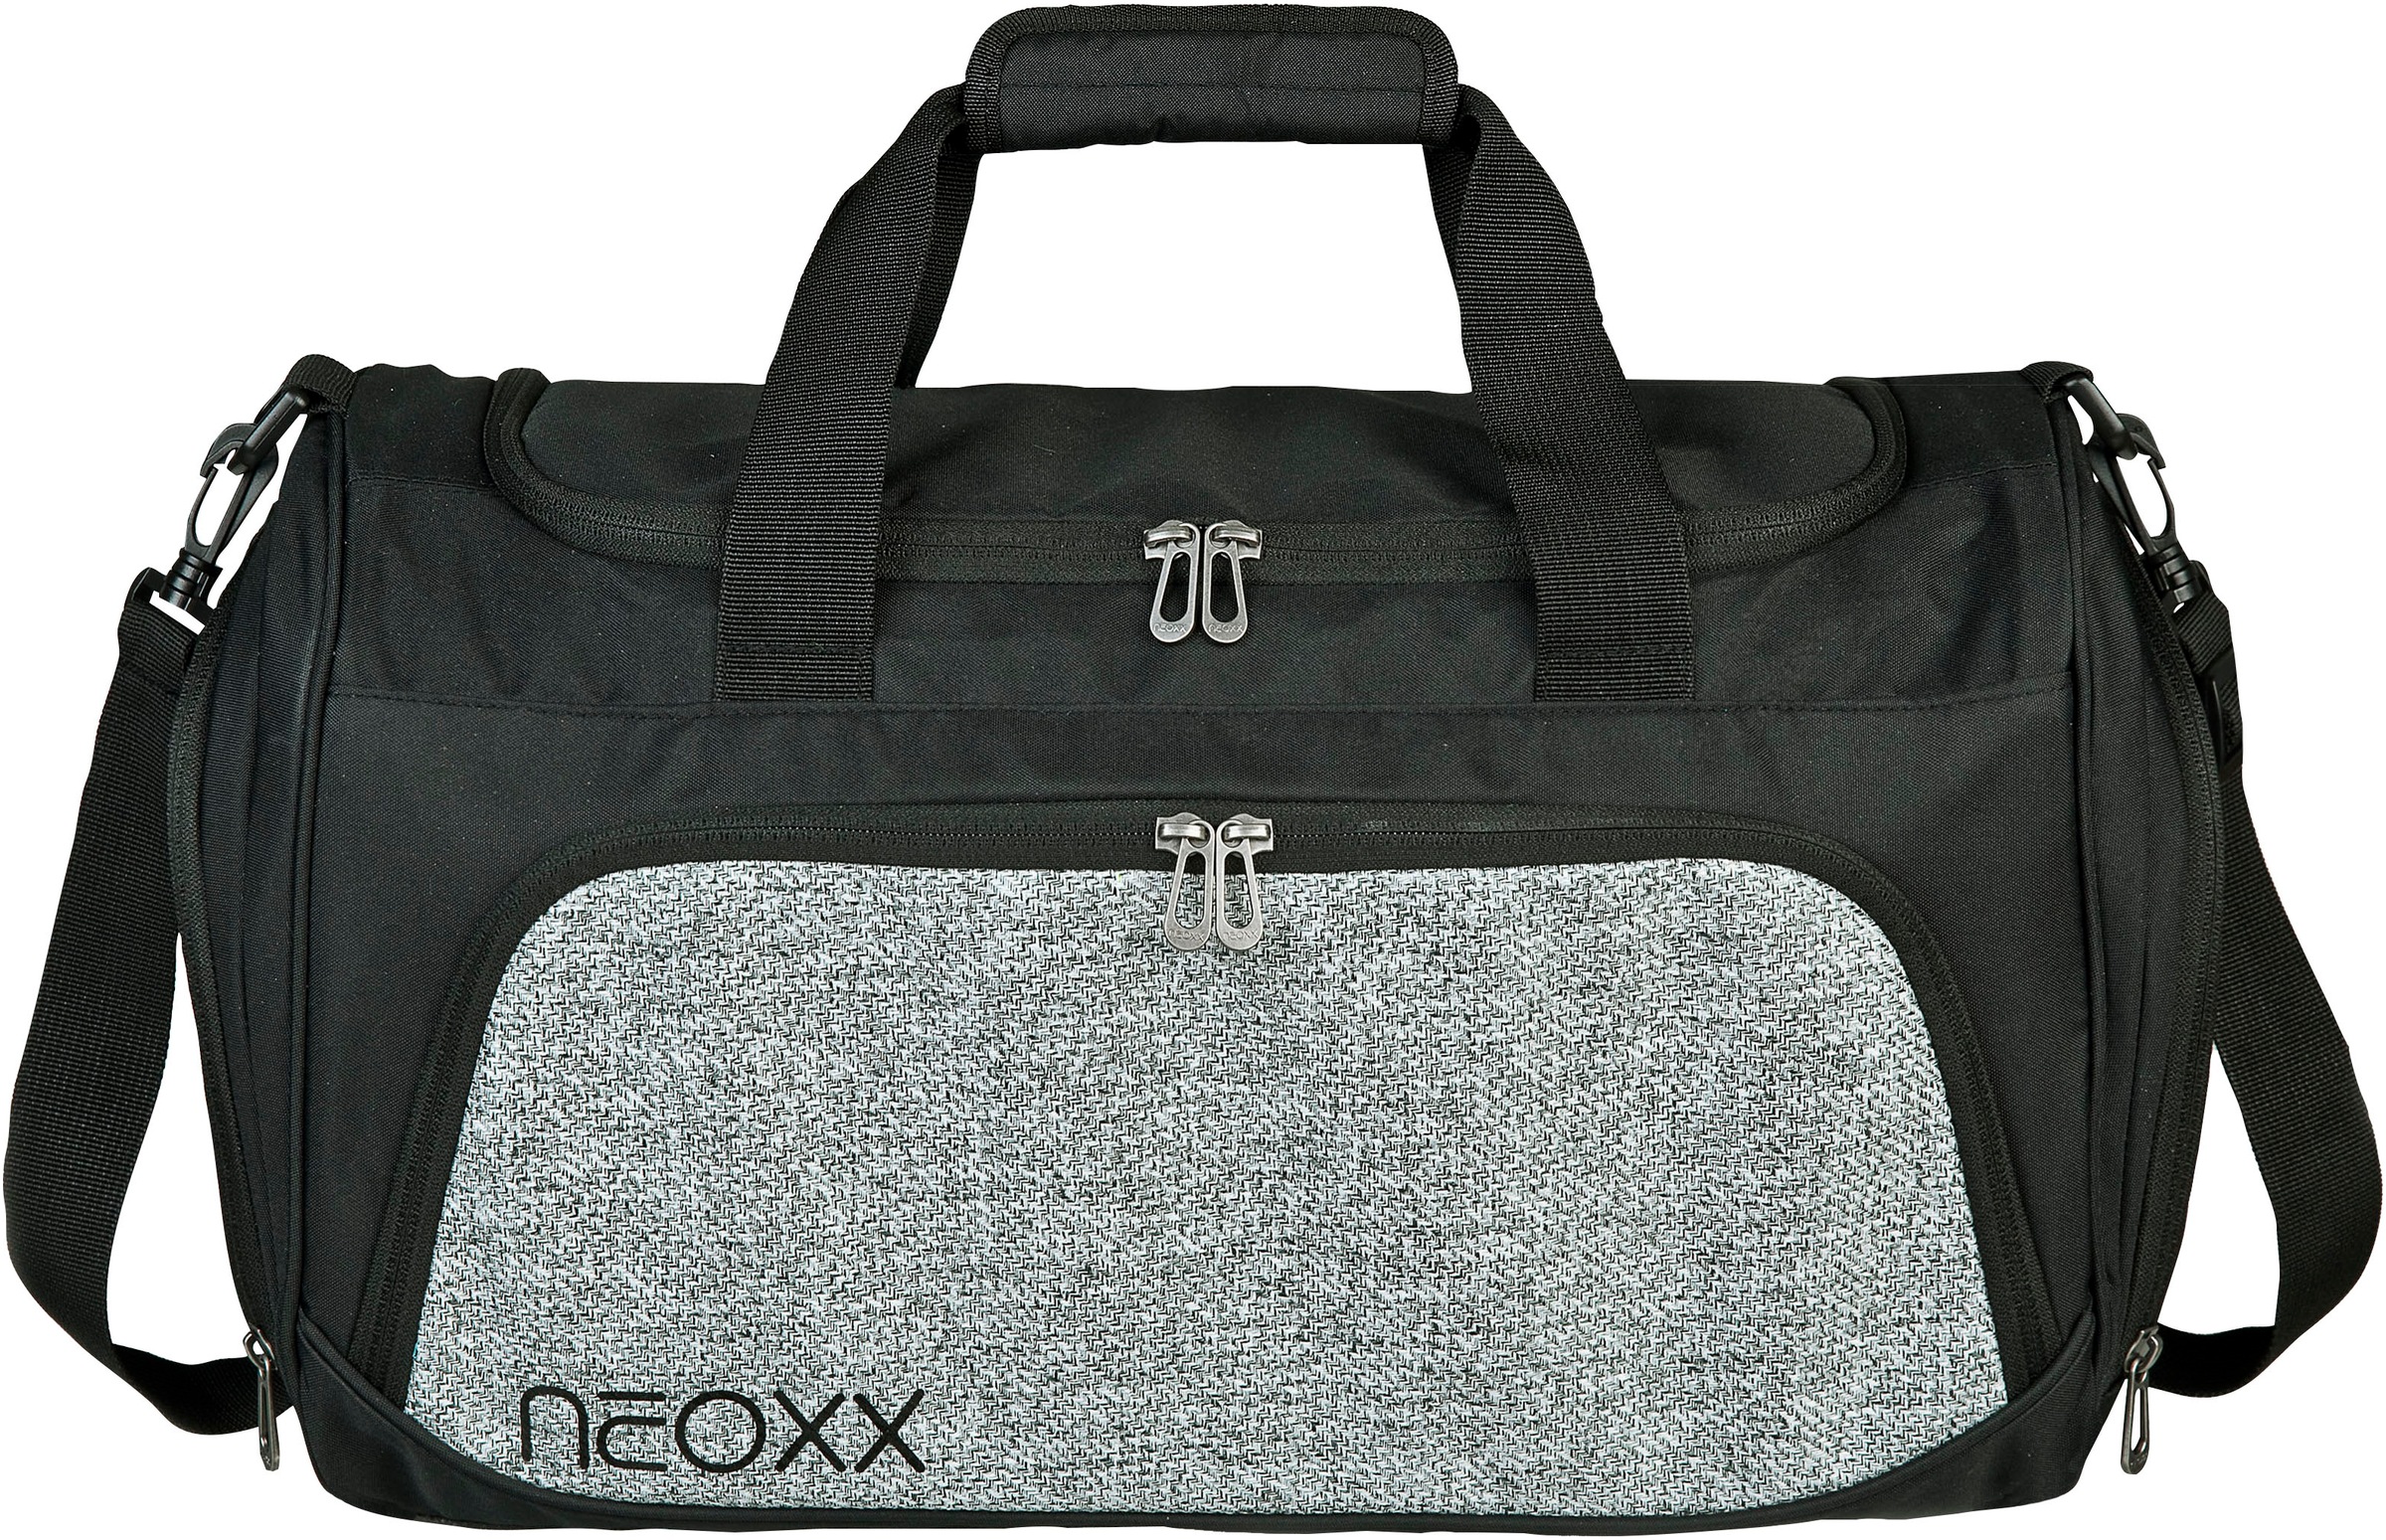 neoxx Sporttasche »Move, Wool the World«, teilweise aus recyceltem Material